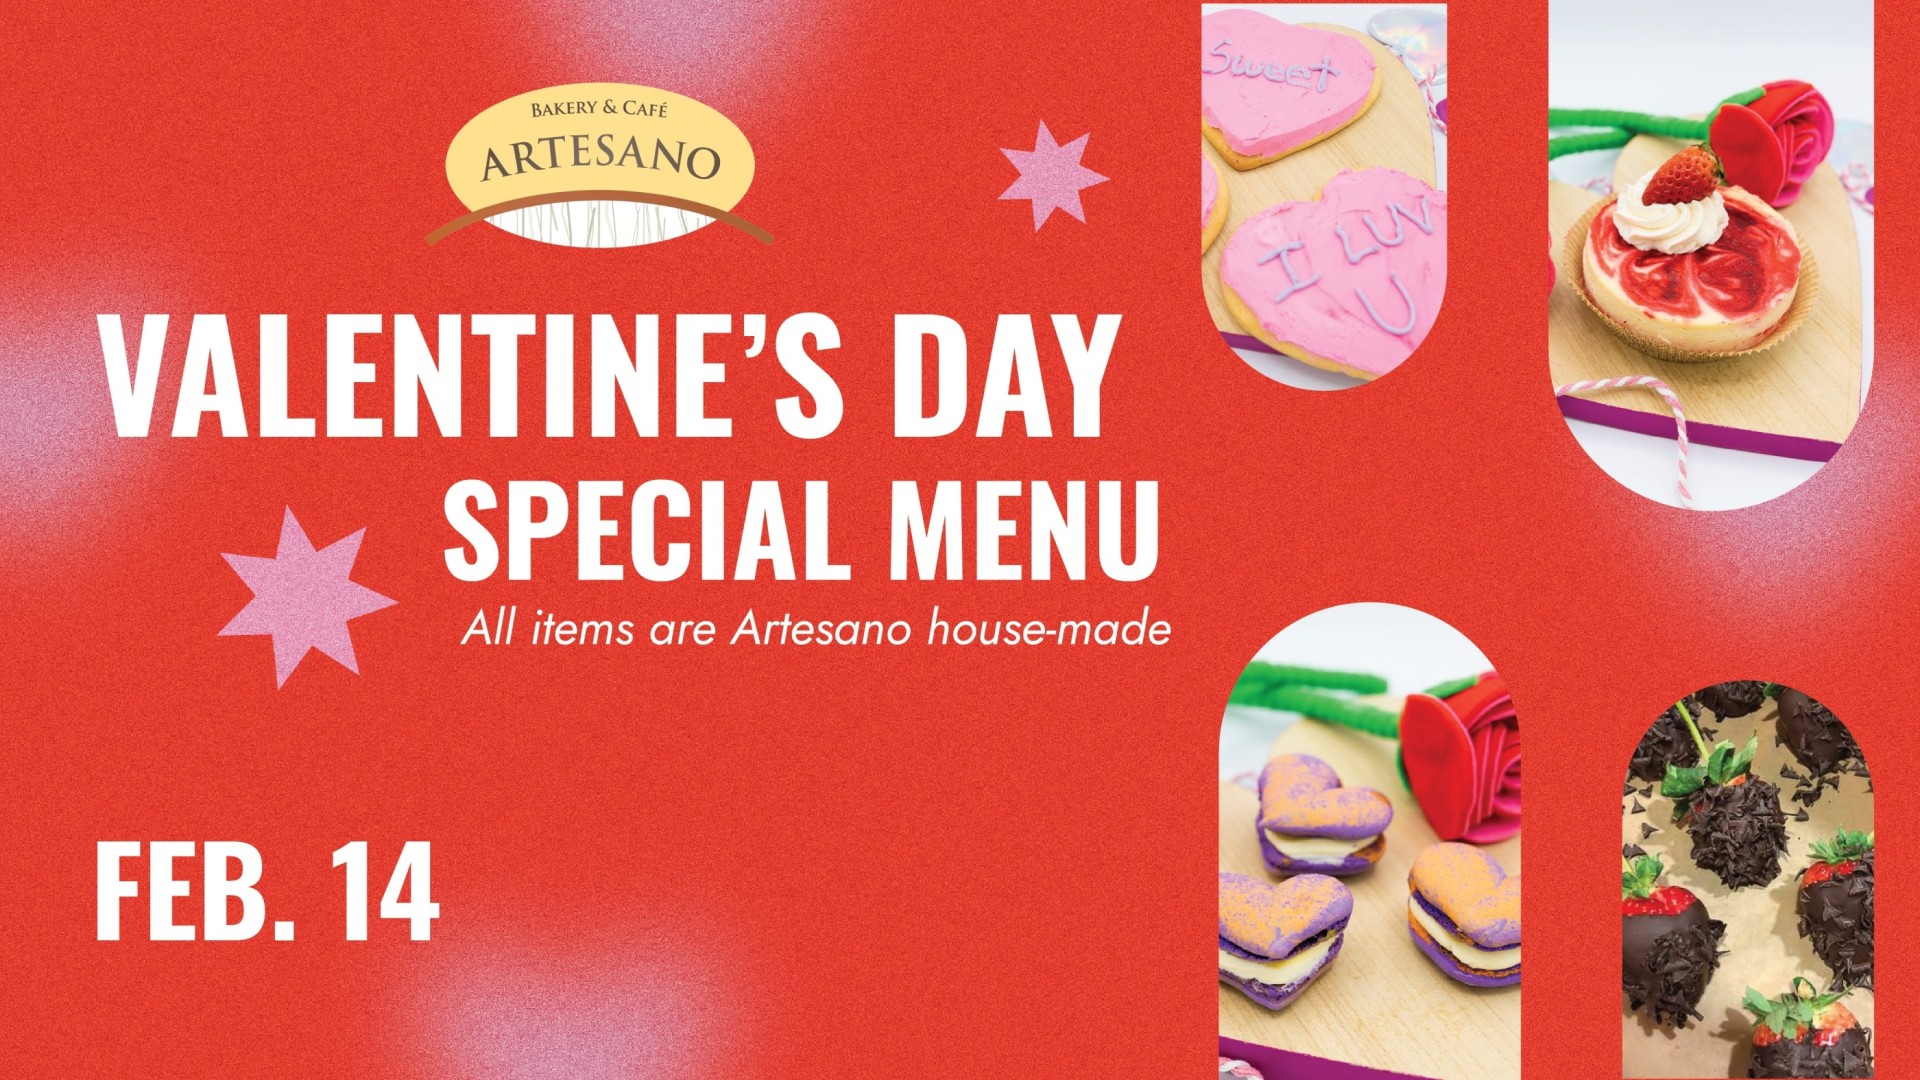 Valentine's Day Specials at Artesano Bakery & Café